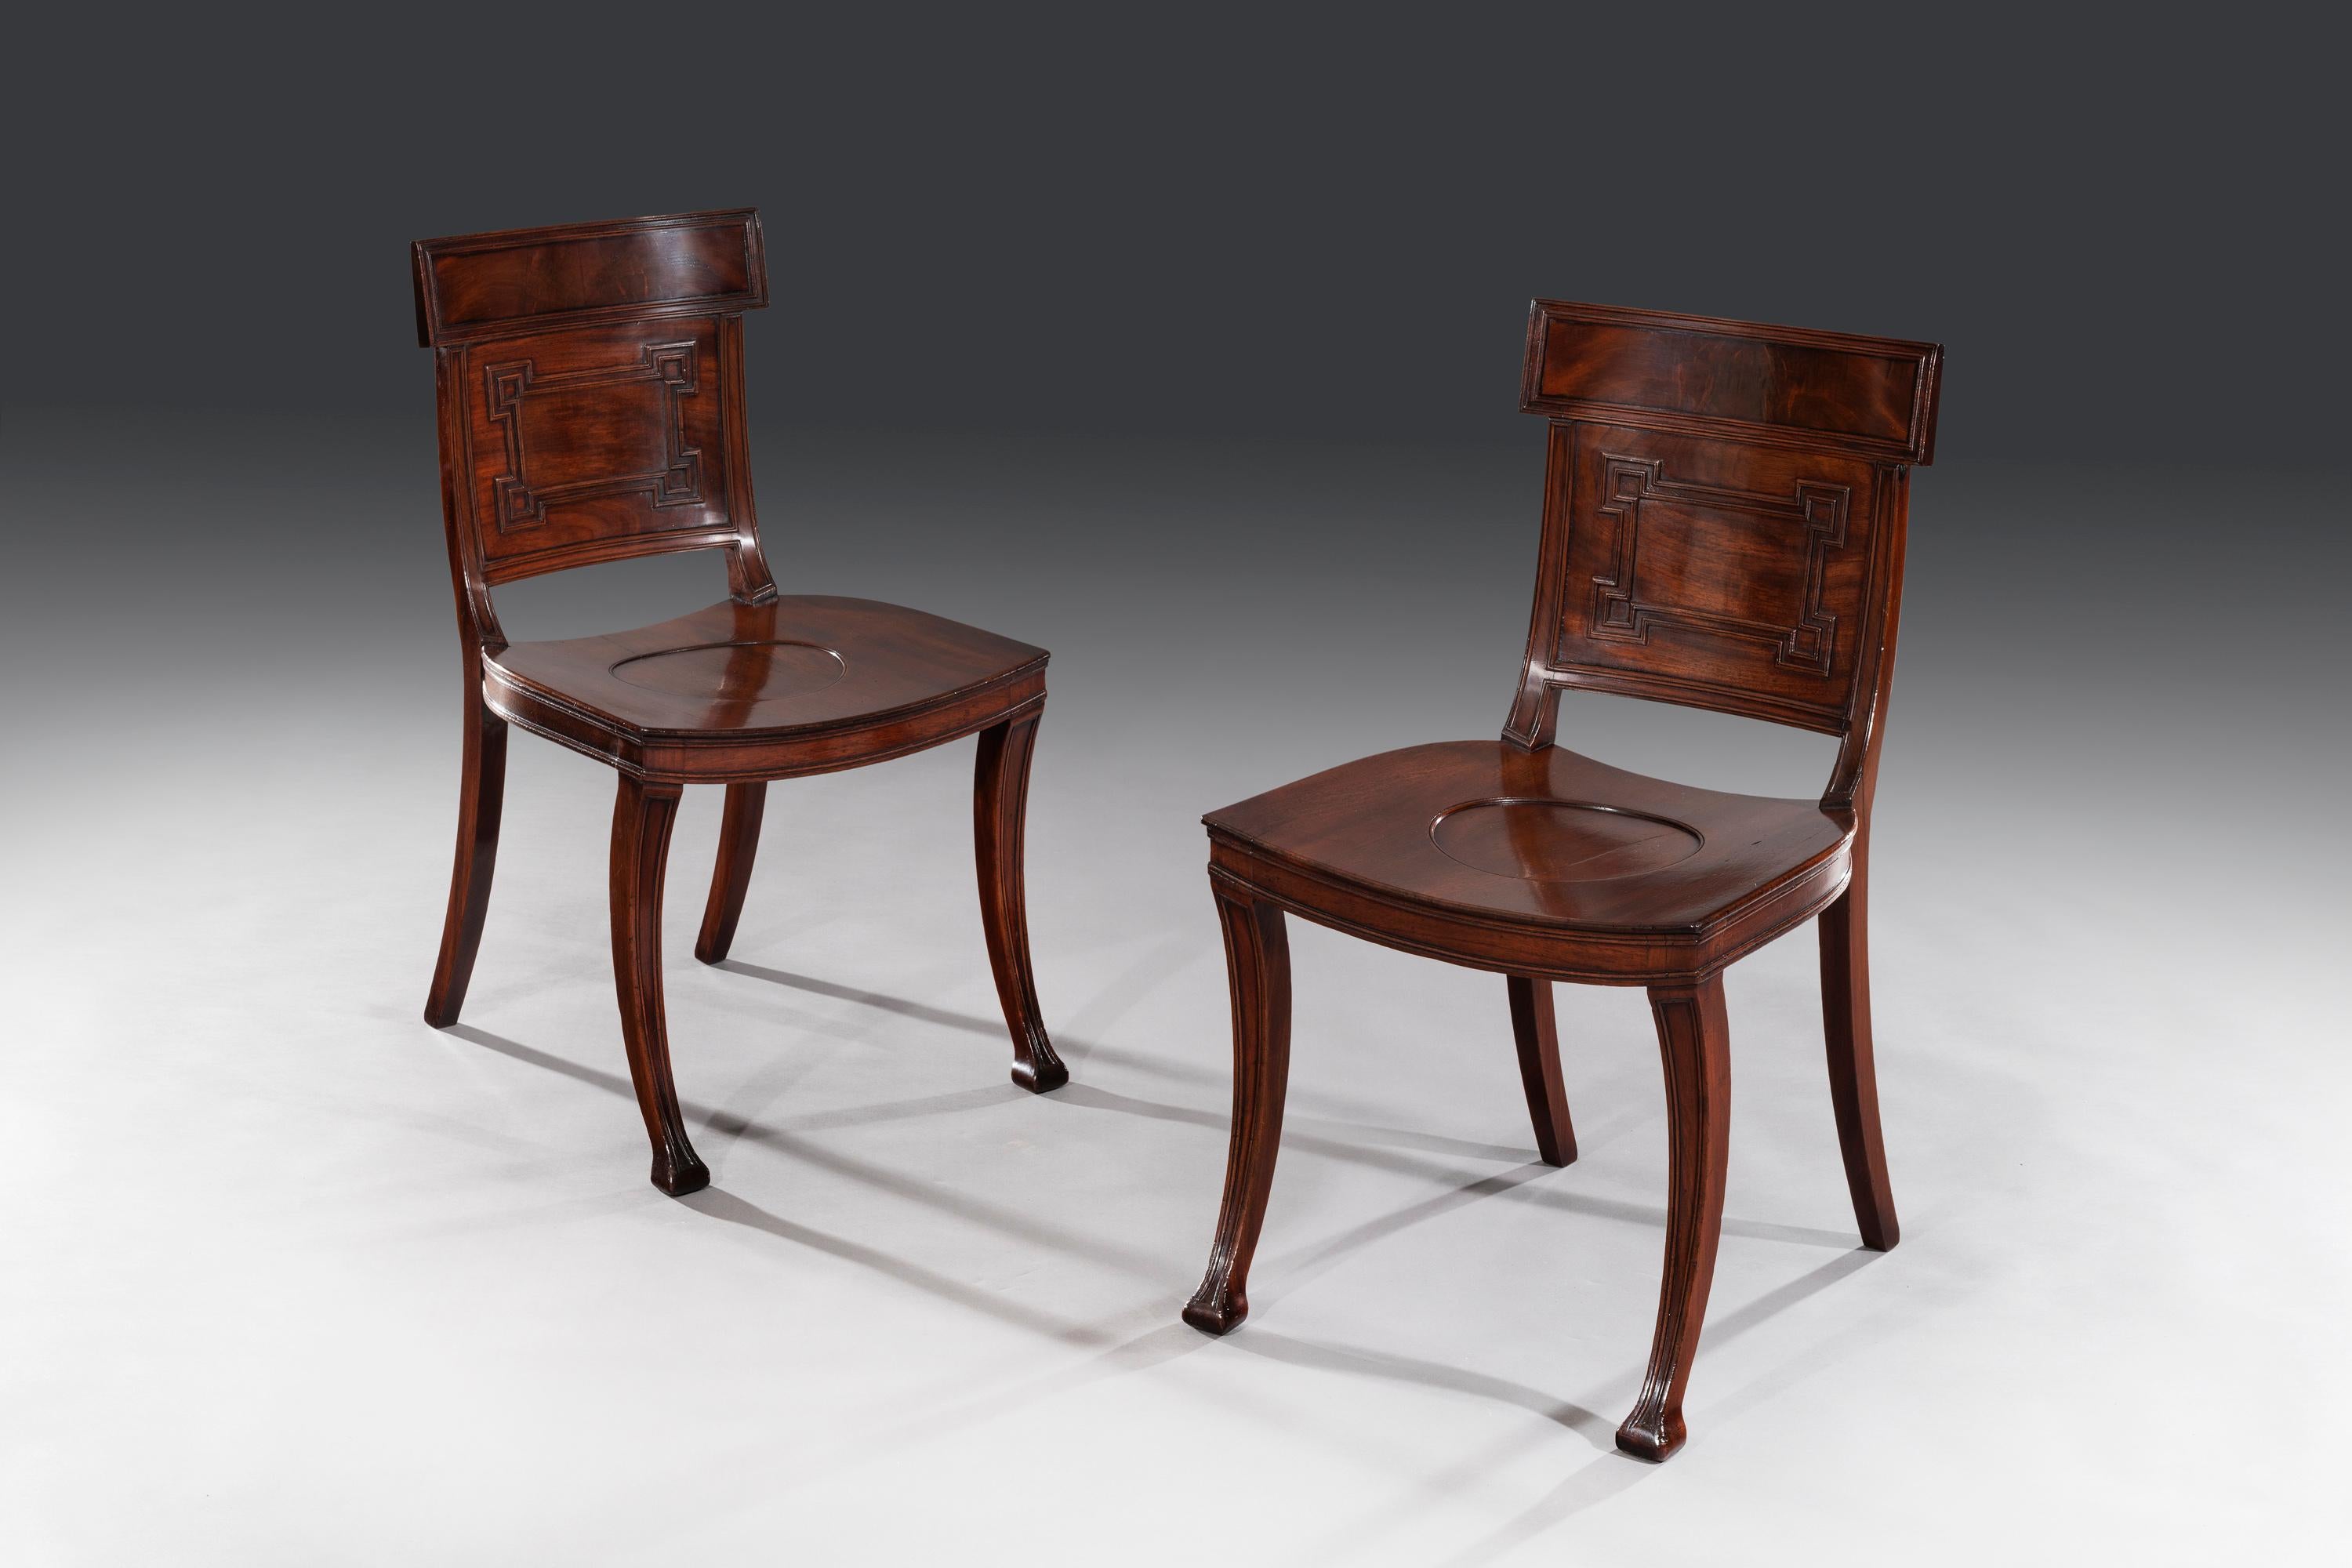 English Regency Period Mahogany Hall Chairs Made by Eldward, Marsh & Tatham